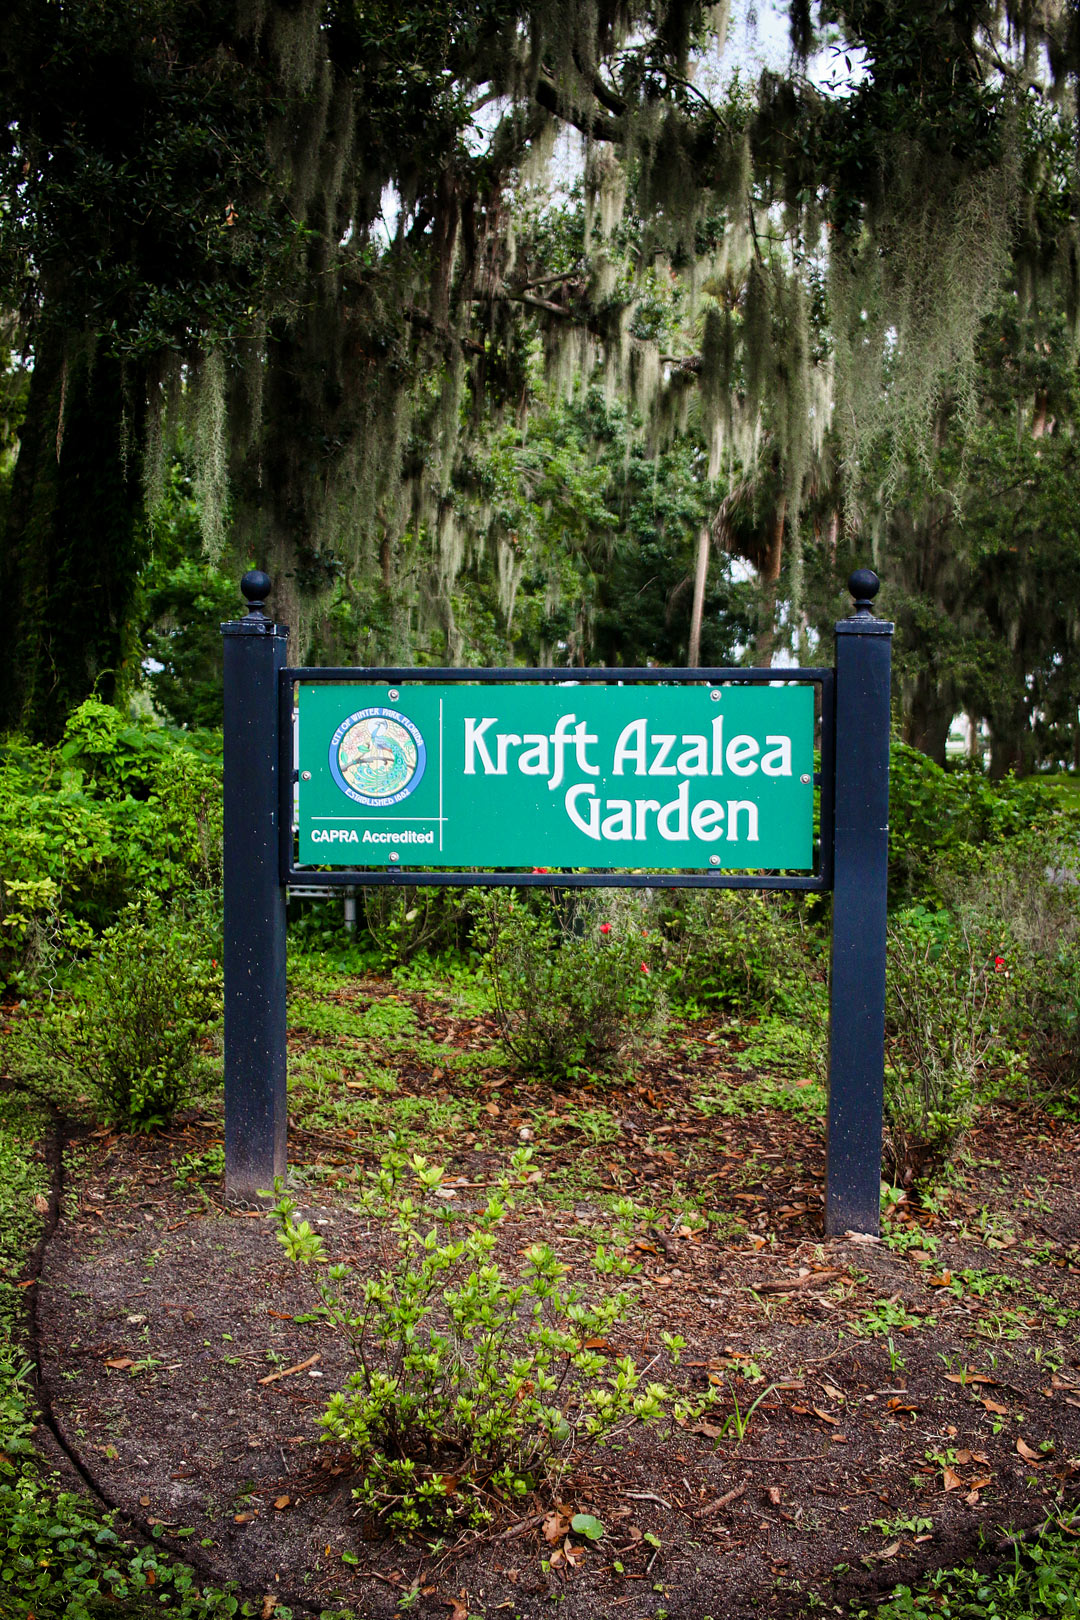 Kraft Azalea Garden + 25 Things to Do in Orlando for Free